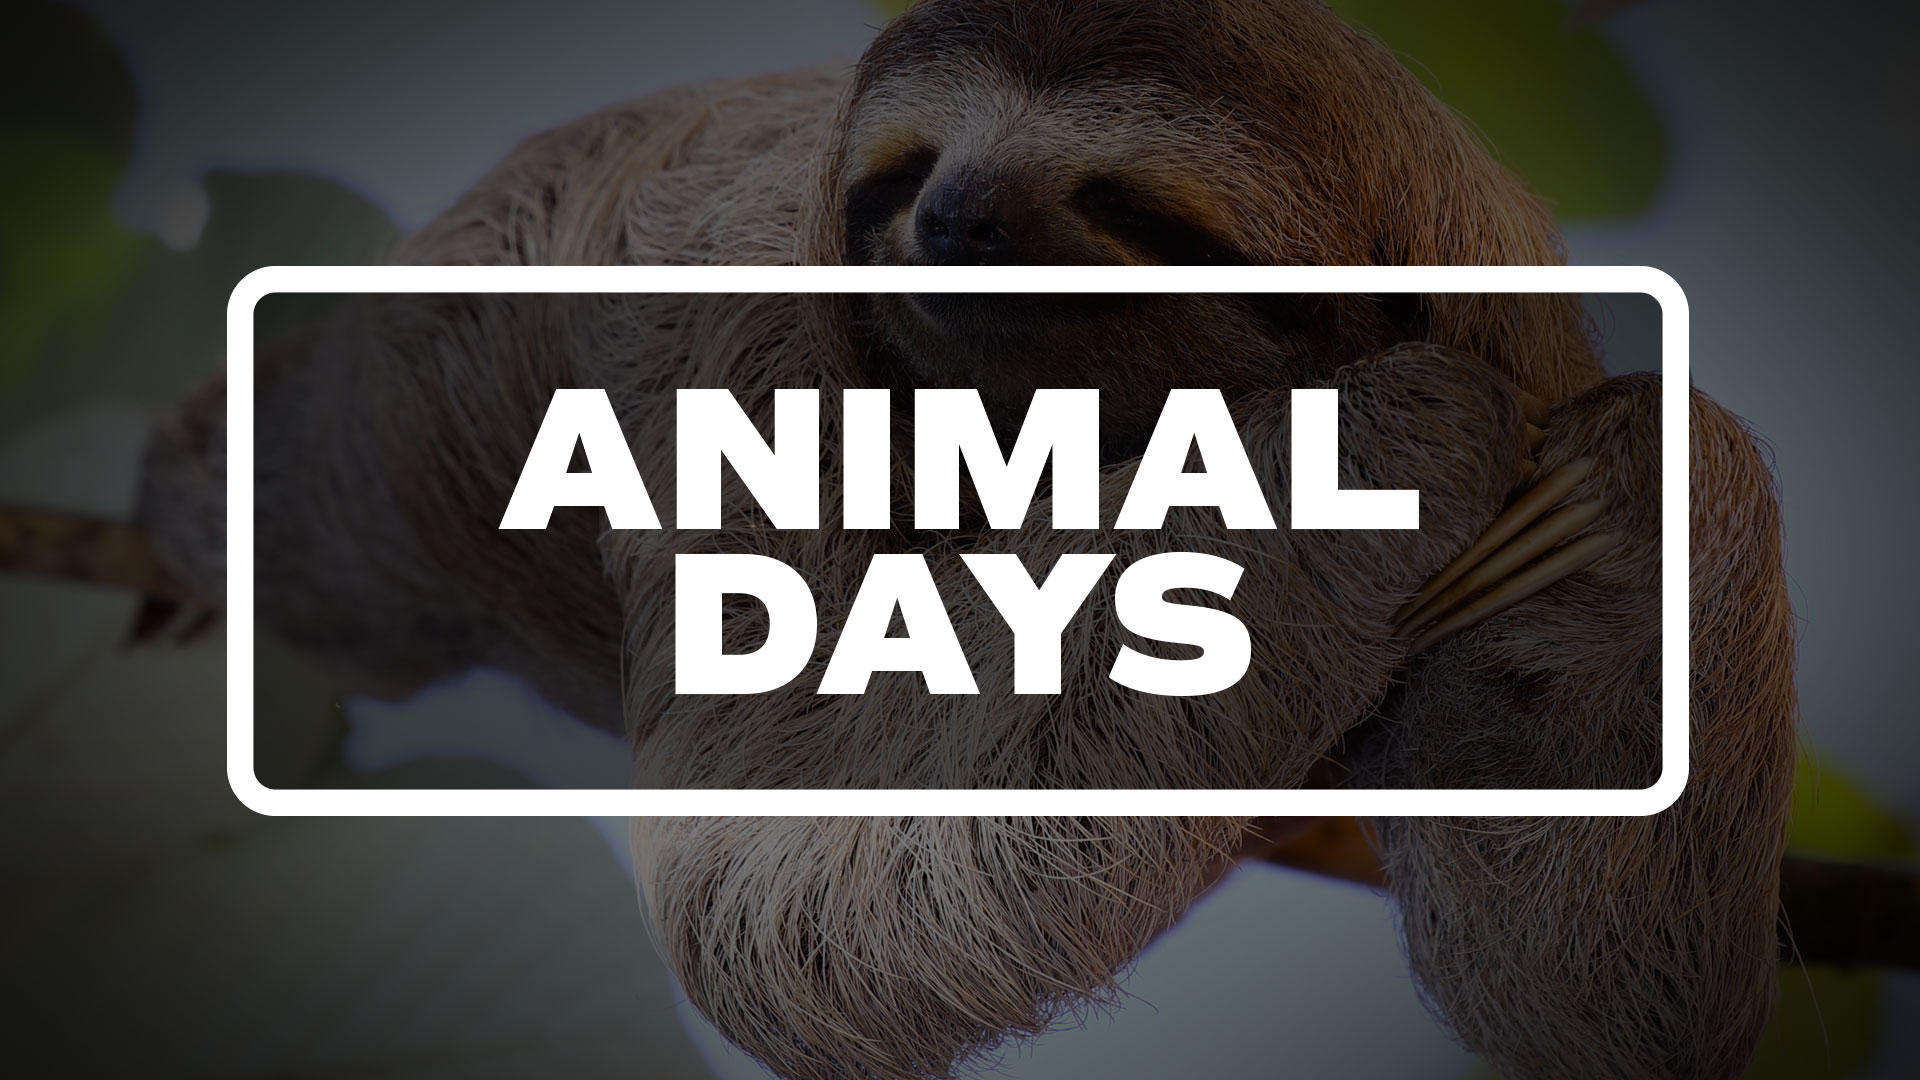 ANIMALDAYS List Of National Days